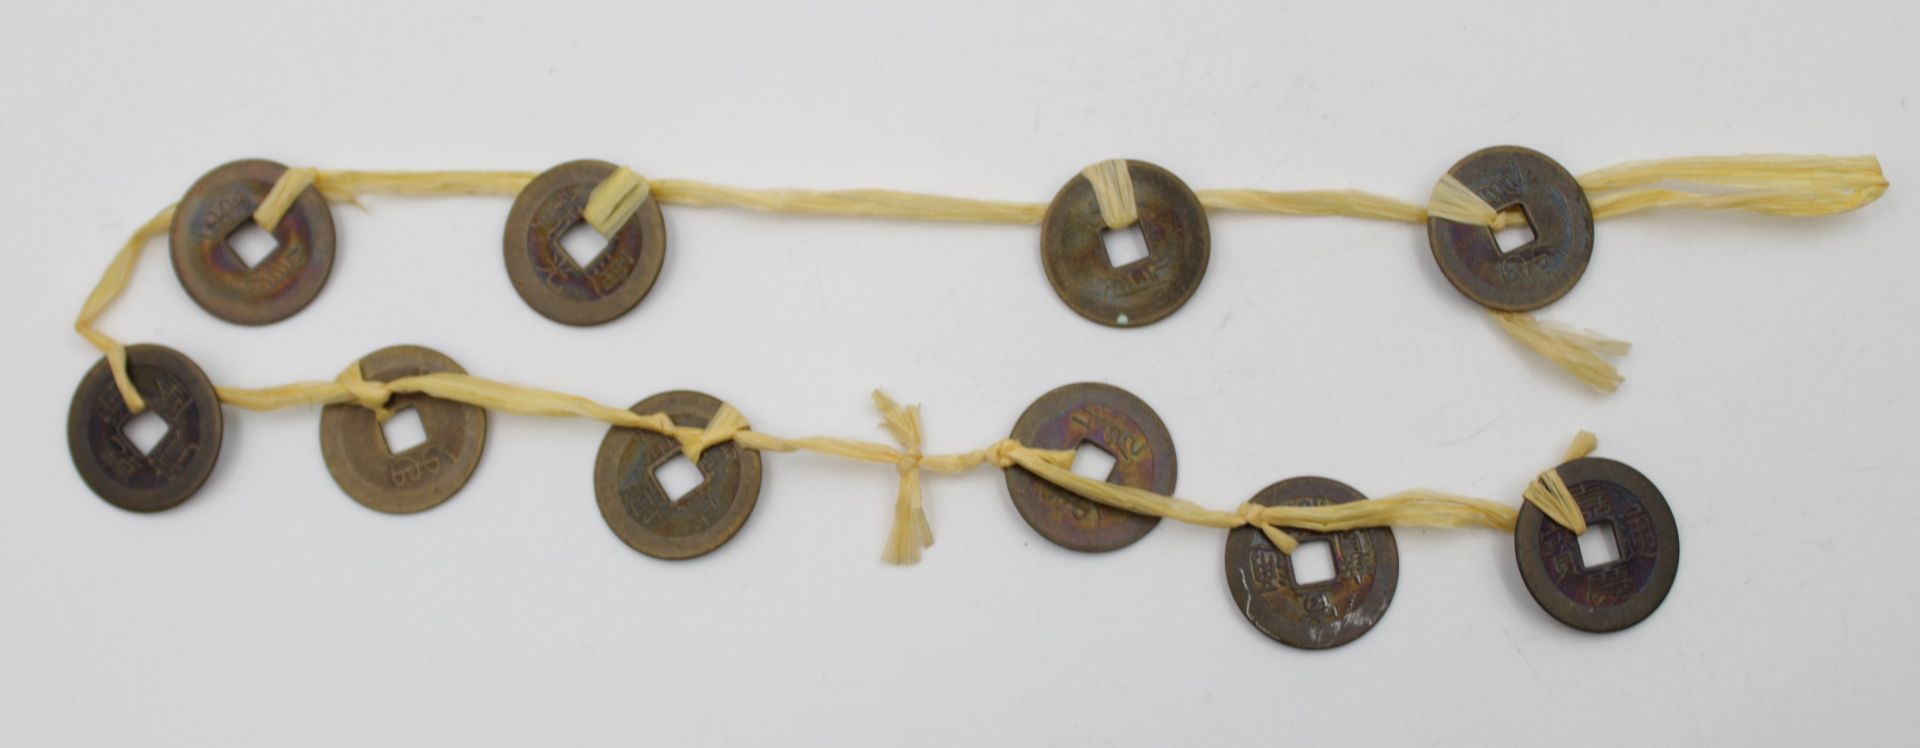 10x div. Münzen, China, alter?, an Band, ca. L-51cm.